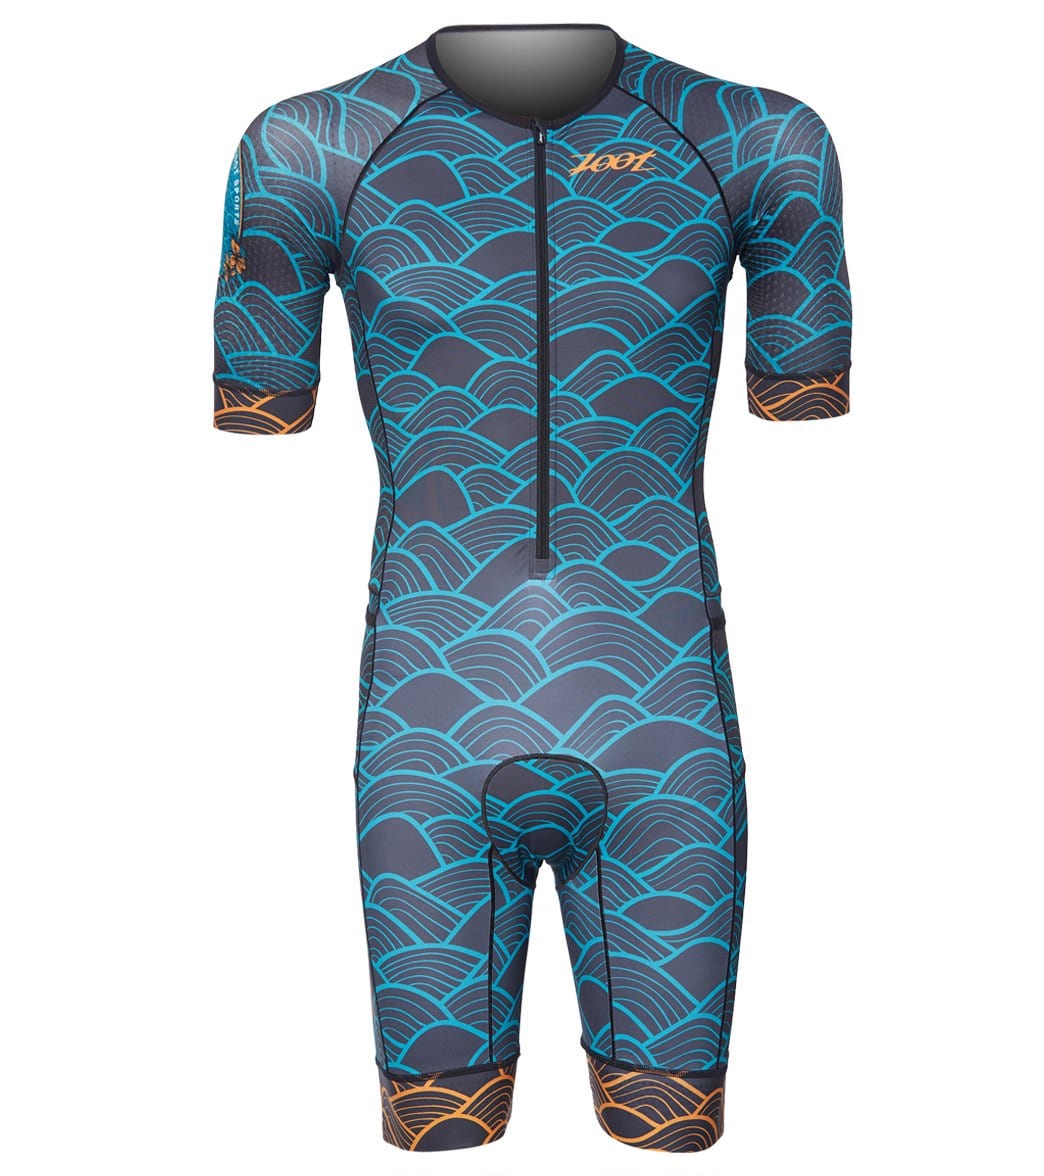 Zoot Men's Ltd Tri Aero Short Sleeve Shirt Race Suit - Aloha 19 Small - Swimoutlet.com